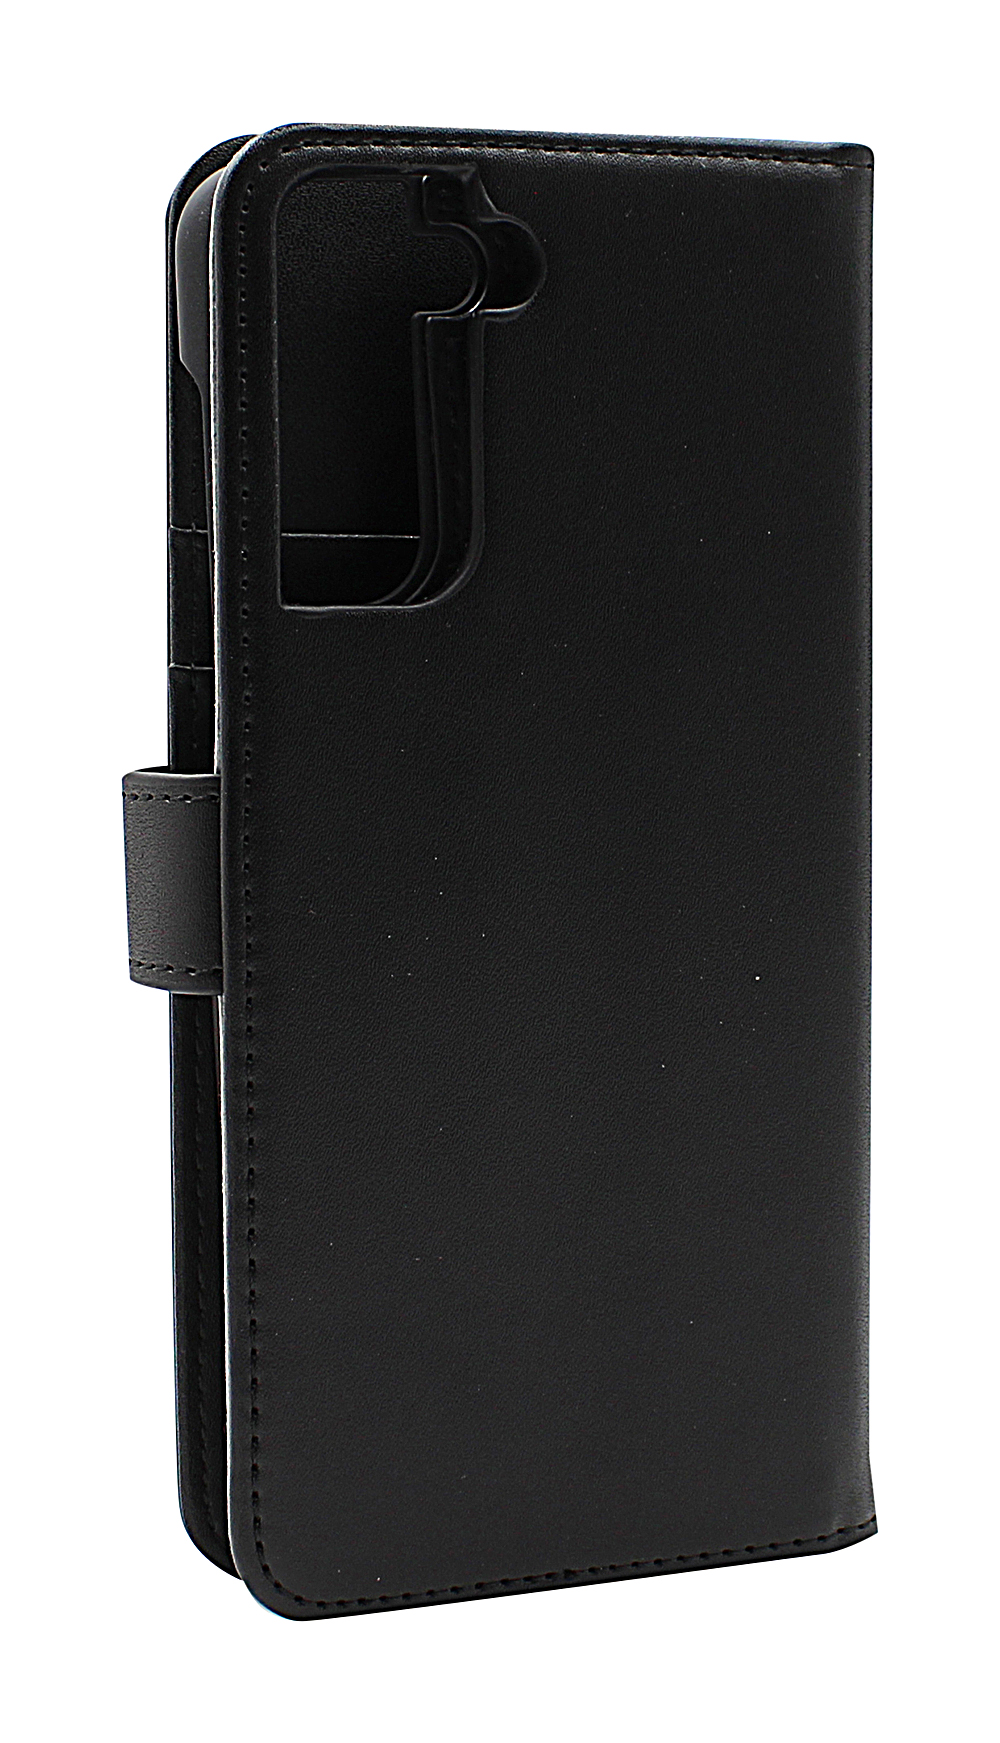 CoverInSkimblocker Magnet Fodral Samsung Galaxy S21 Plus 5G (G996B)